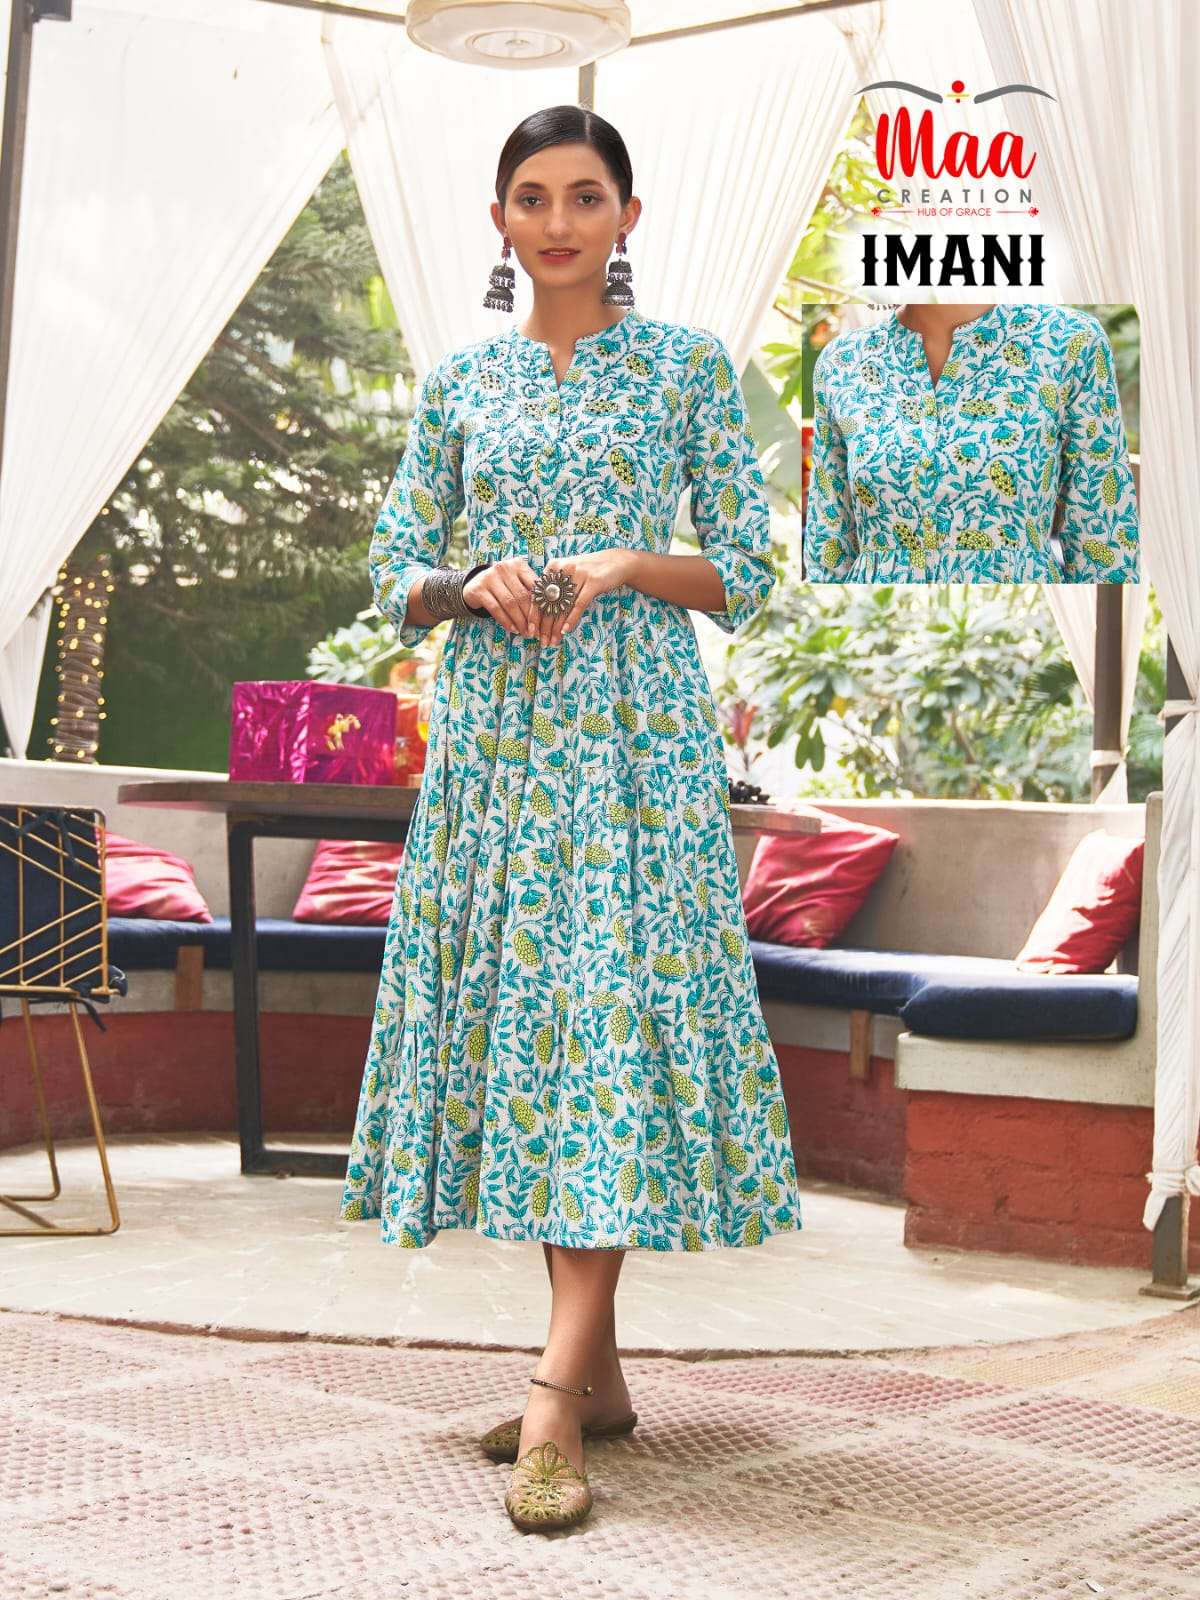 Maa Creation Imani Exclusive Long Flair Kurti Designs Wholesaler